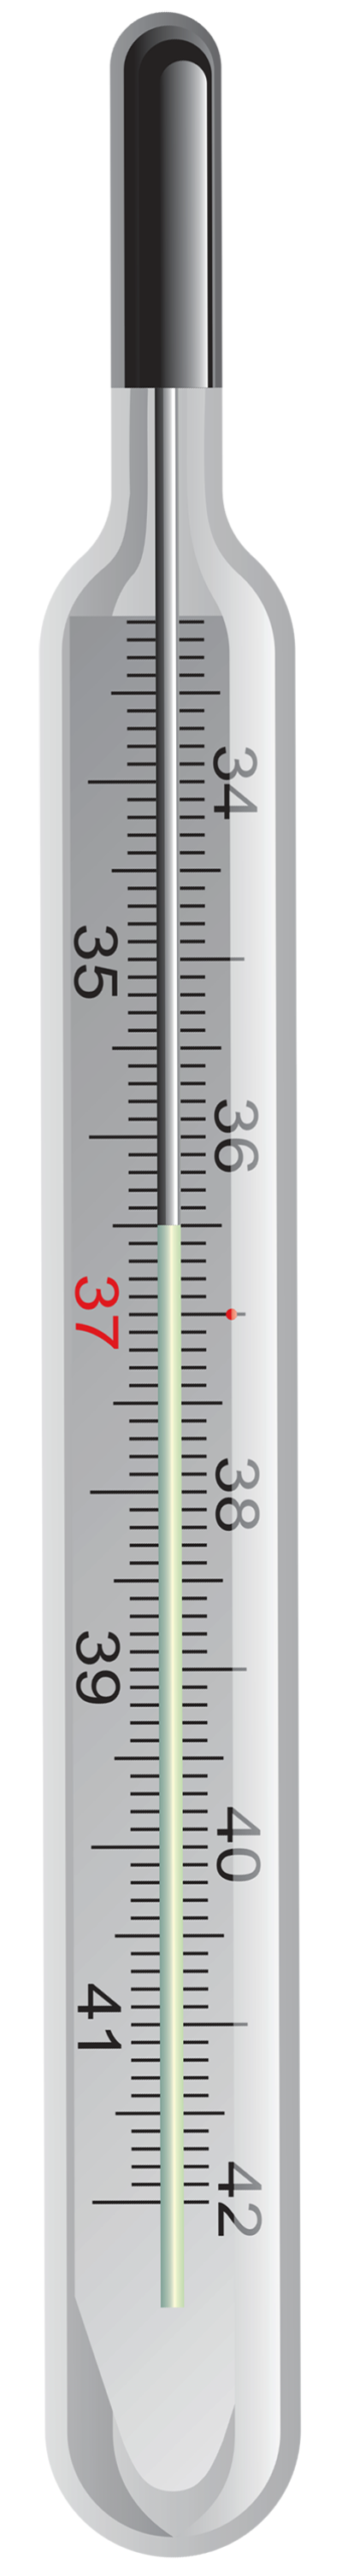 Termometro